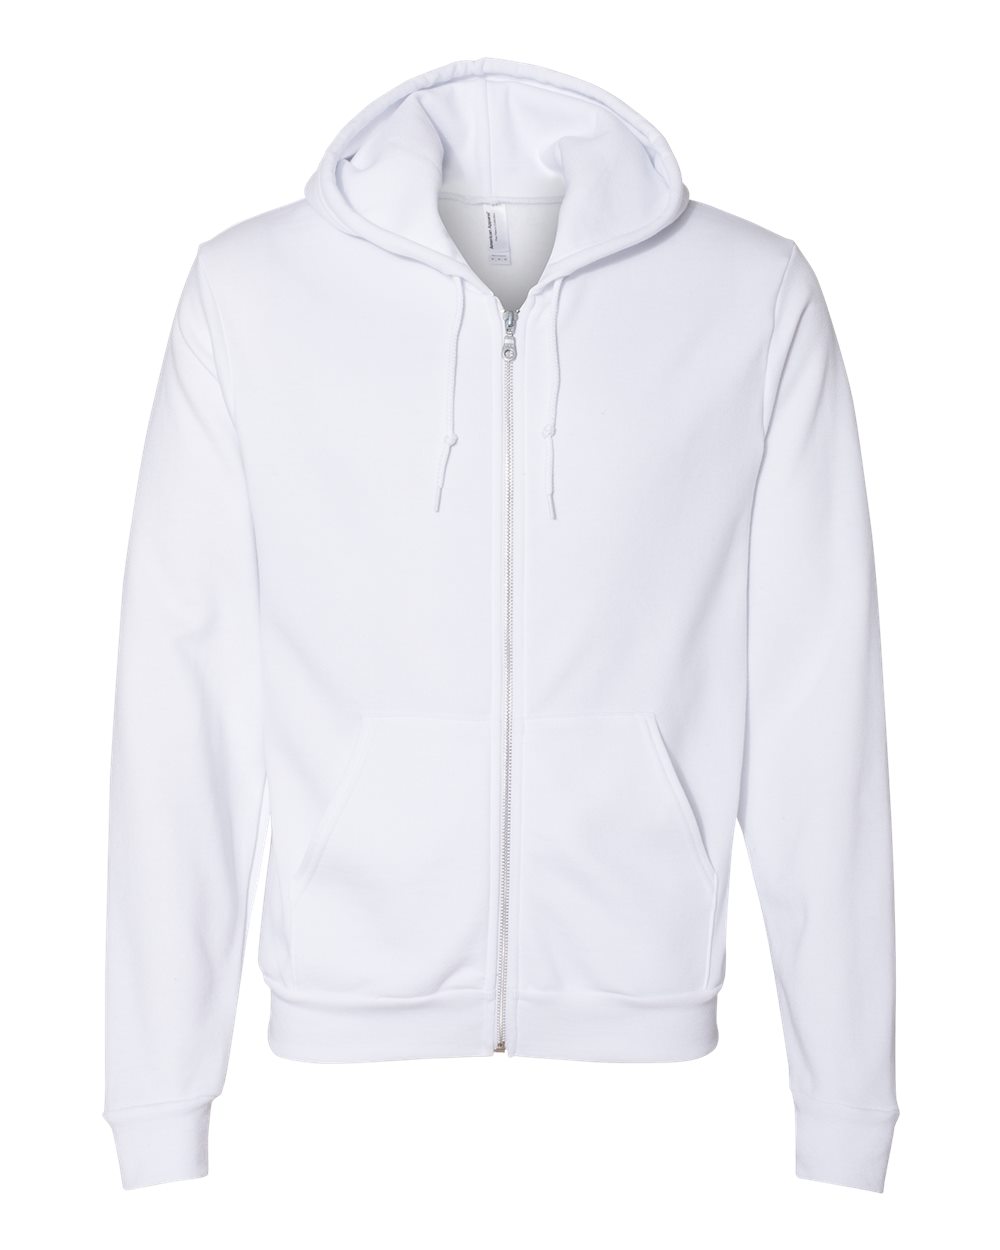 Independent Trading Co. AFX90UNZ - Unisex Full-Zip Hooded Sweatshirt Classic Navy - Xs